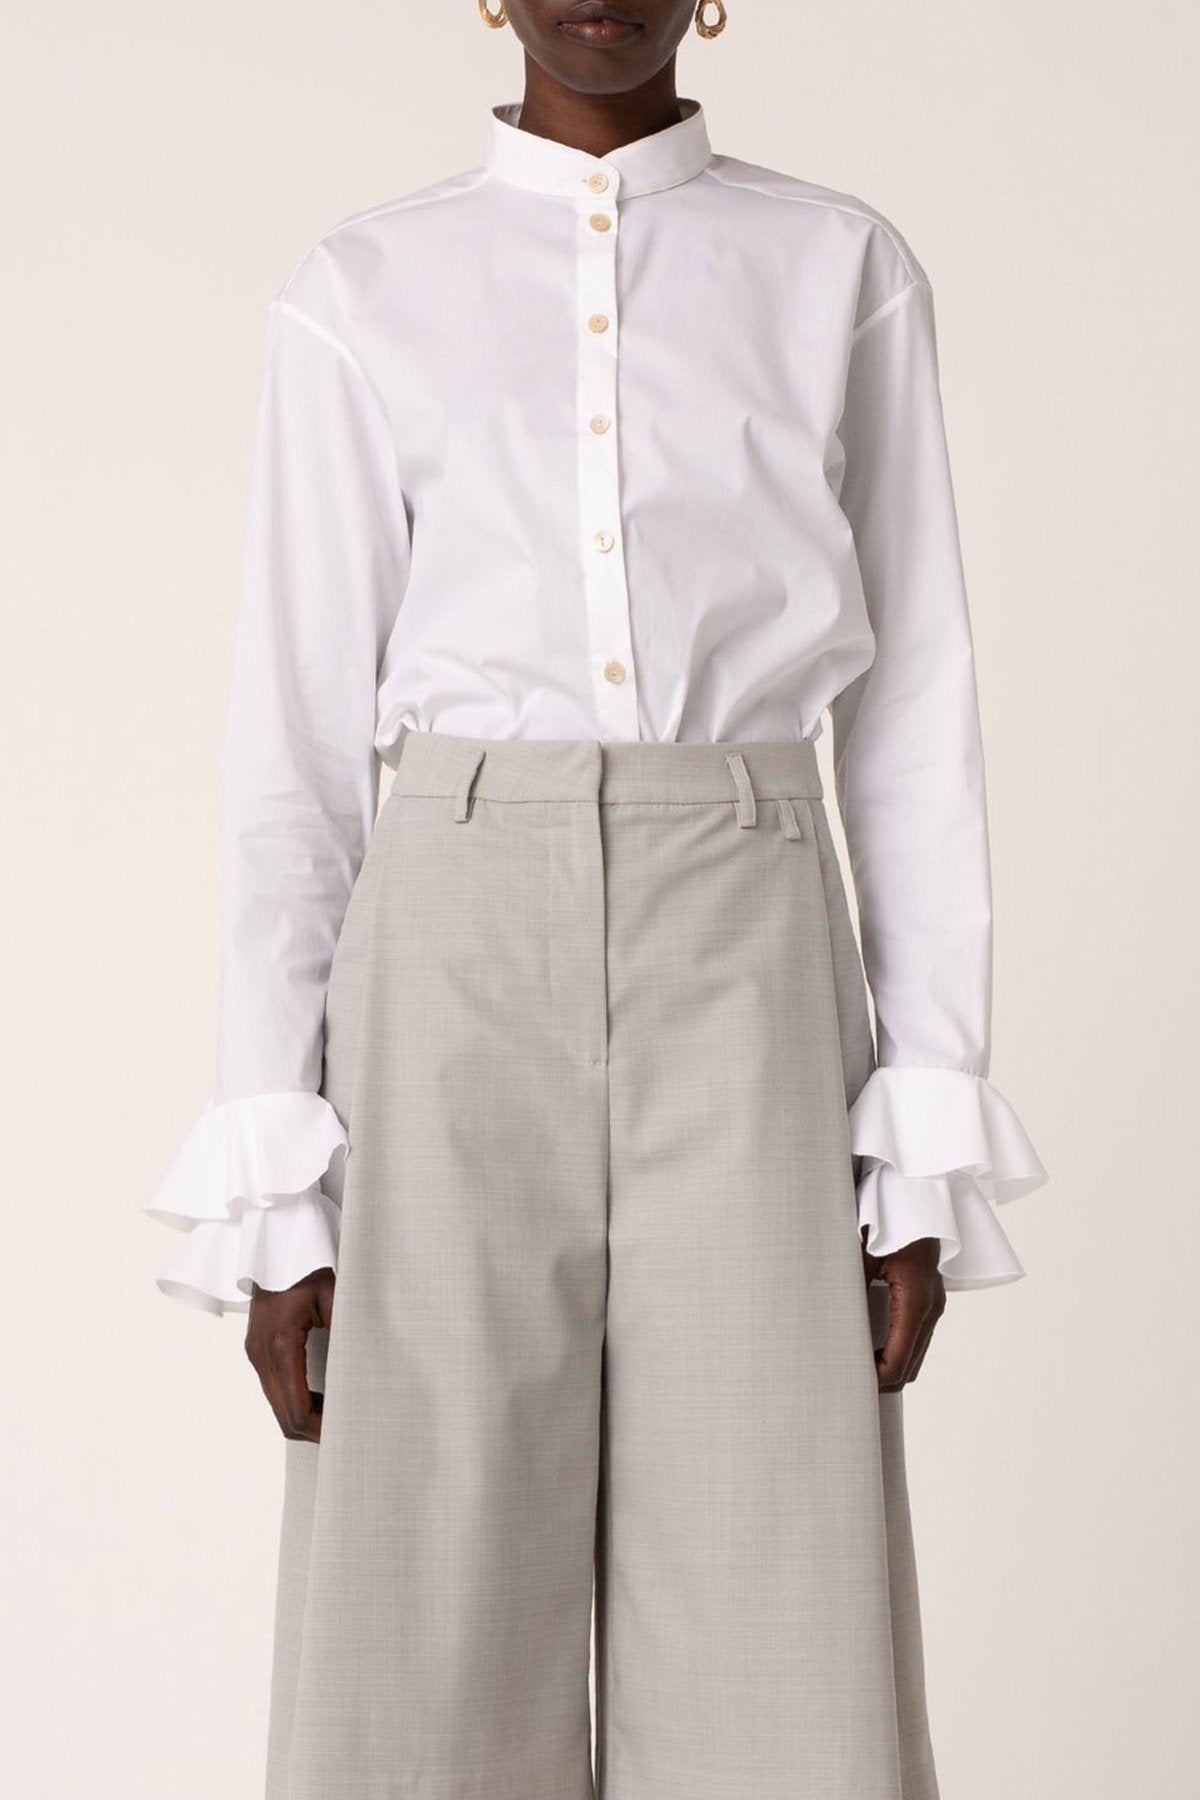 Flourish Flounce Cuff Shirt in White - shop-olivia.com